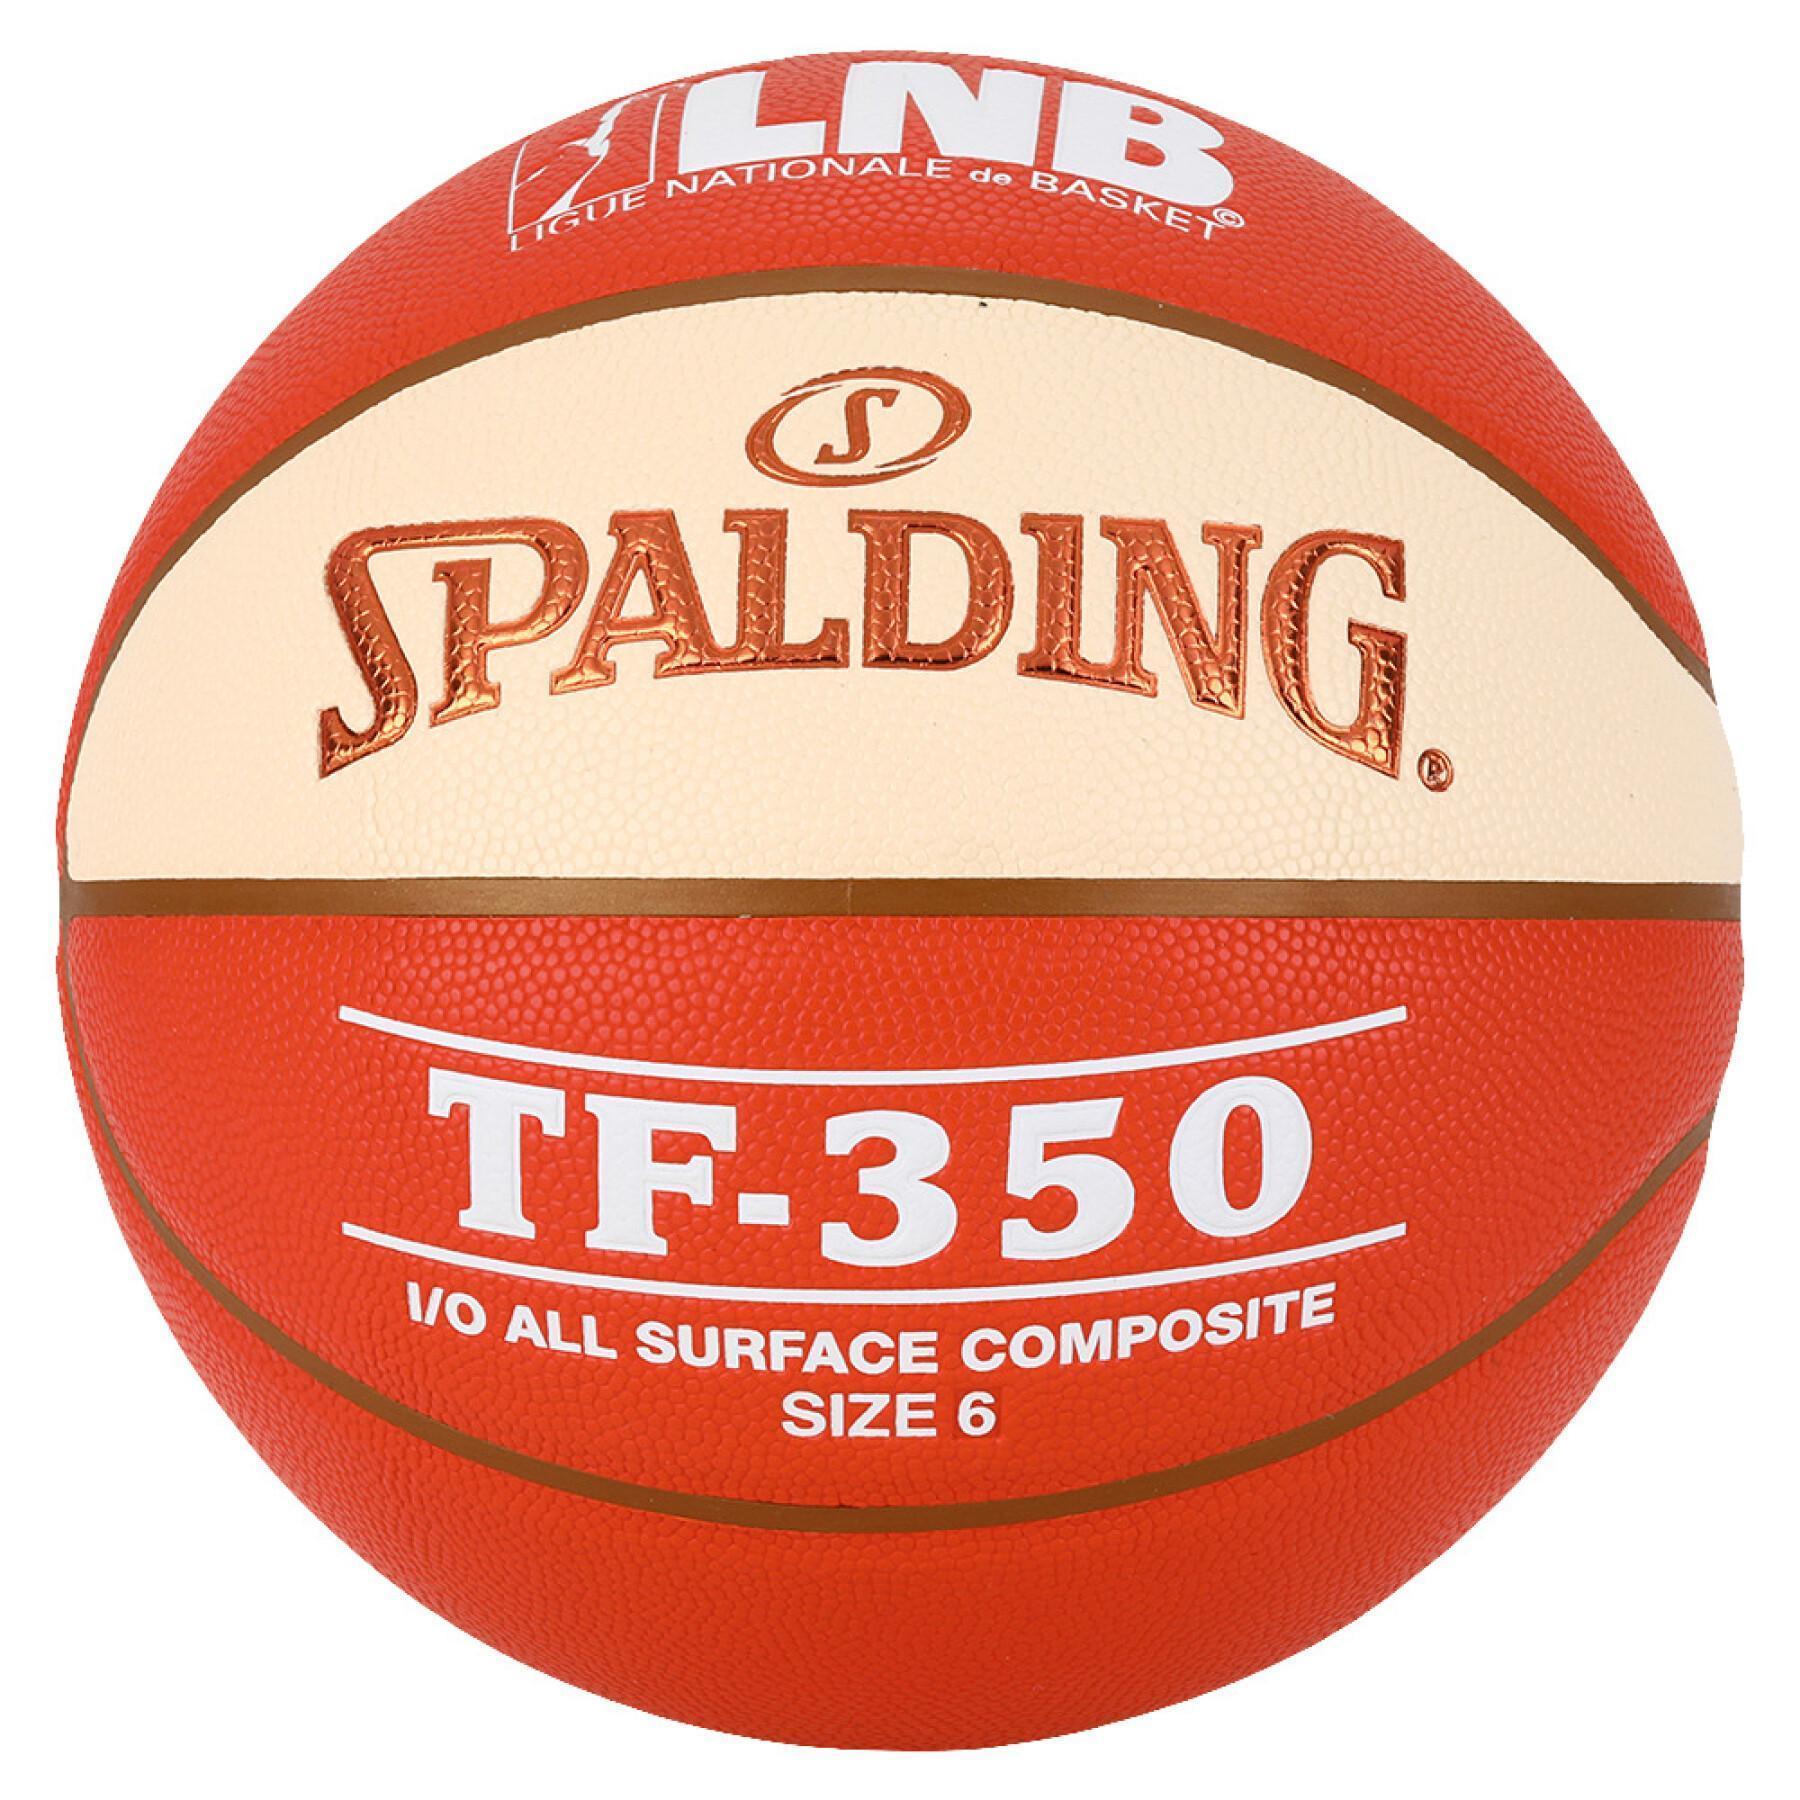 Balloon Spalding Legacy TF-350 Composite LNB 2020